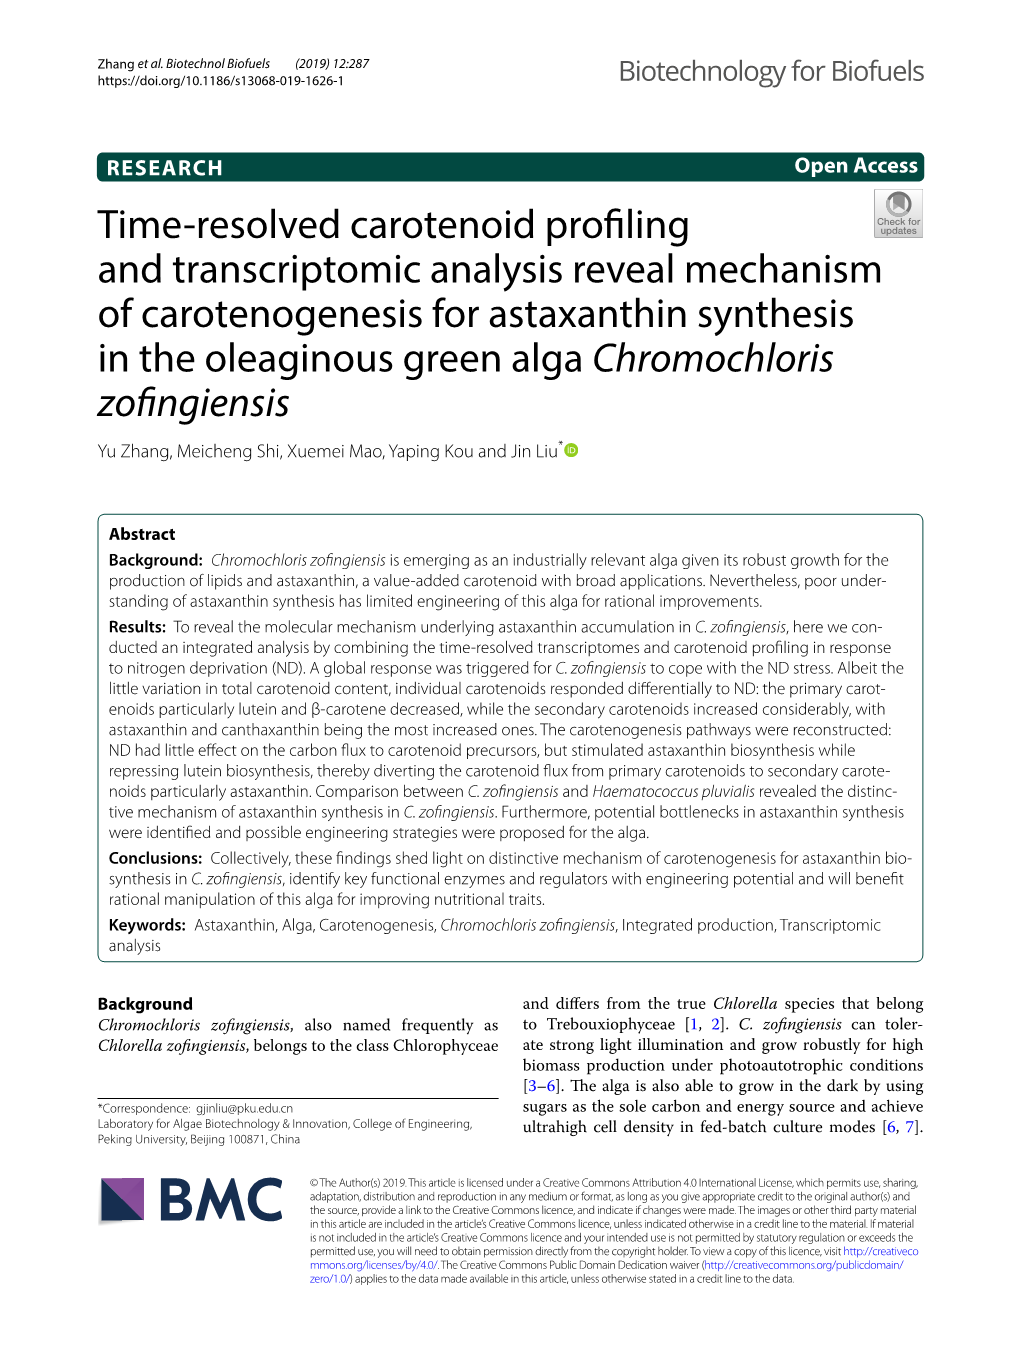 Time-Resolved Carotenoid Profiling and Transcriptomic Analysis Reveal